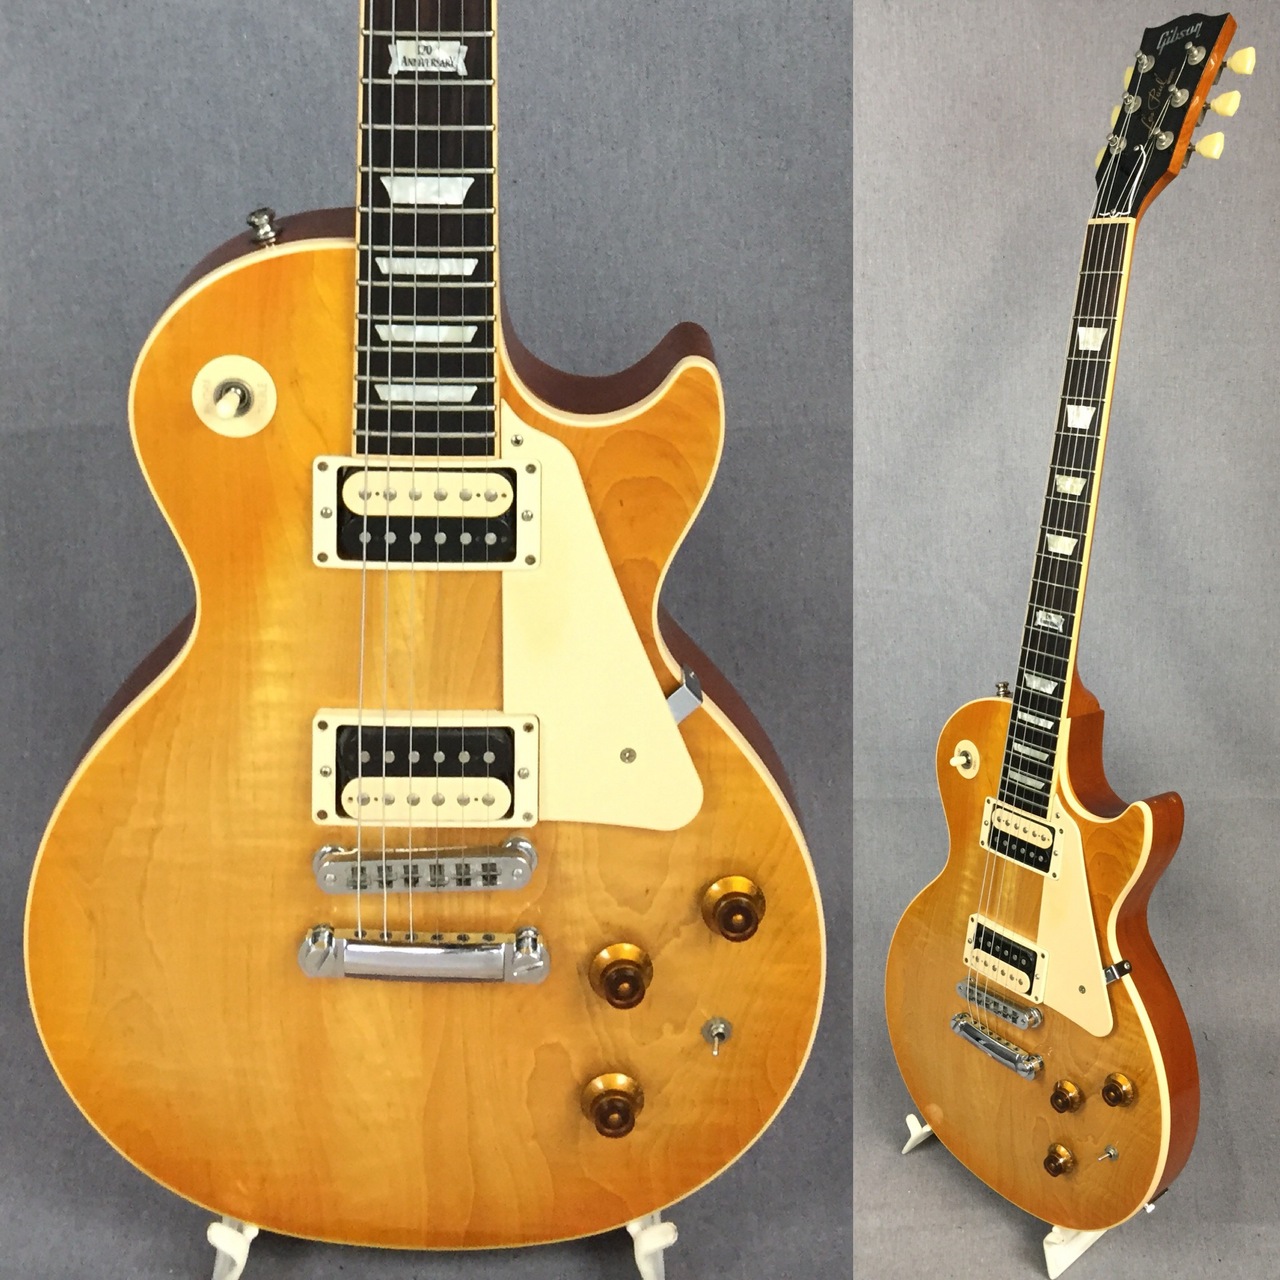 Gibson LesPaul Classic 2014年製 120th ANNIVERSARY MODEL買取りまし